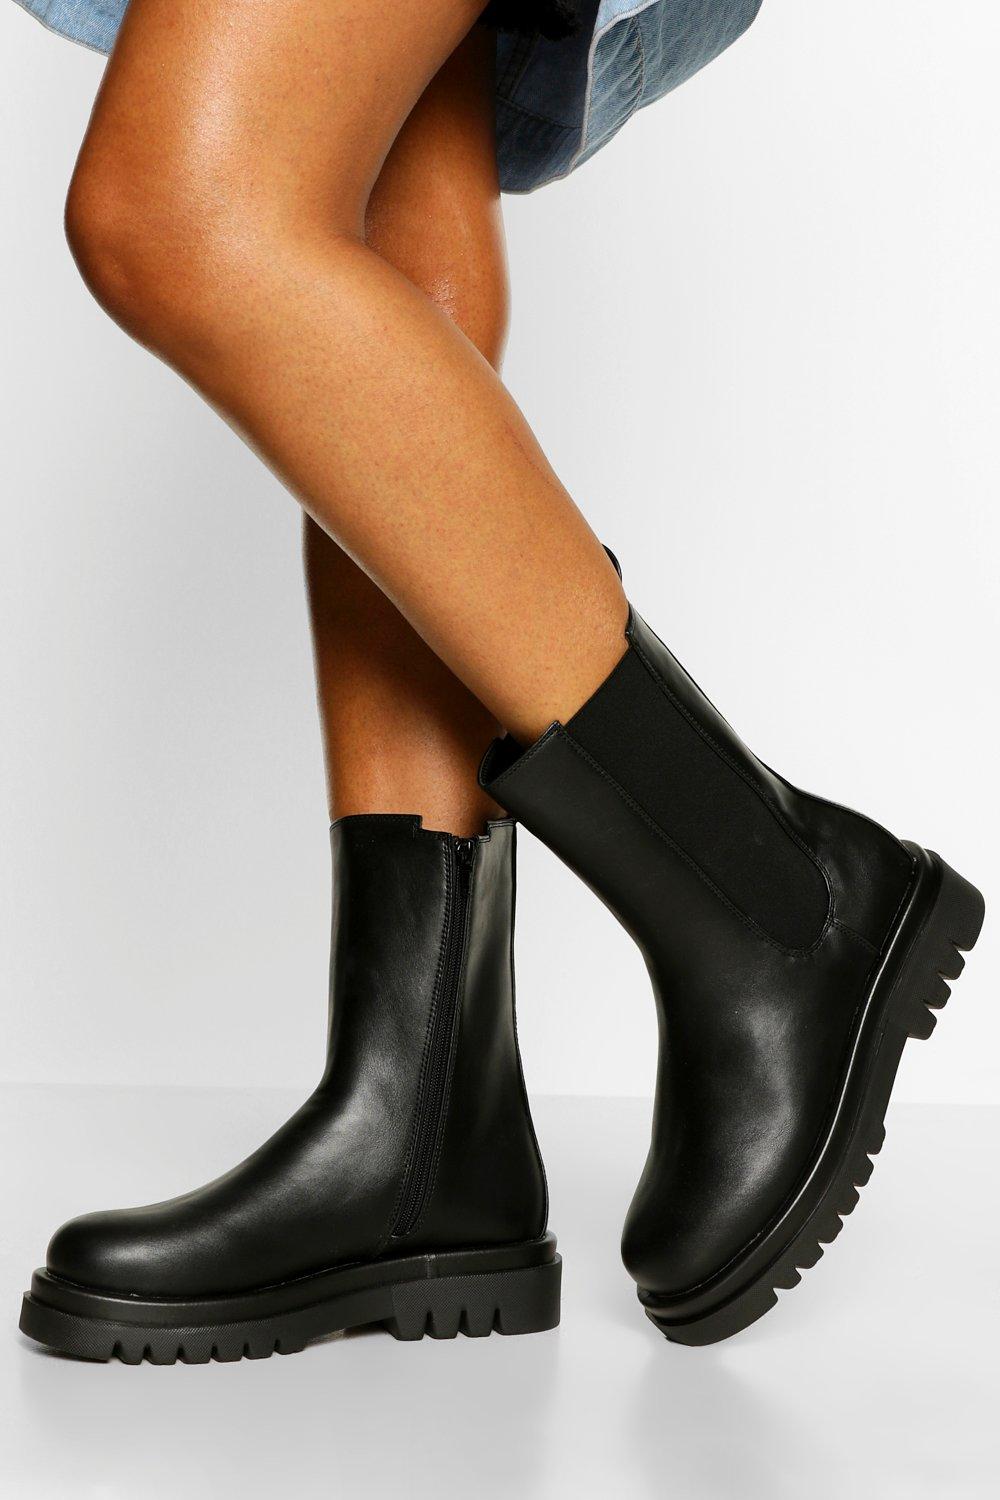 Womens Calf High Chunky Hiker Boots - Black - 6, Black